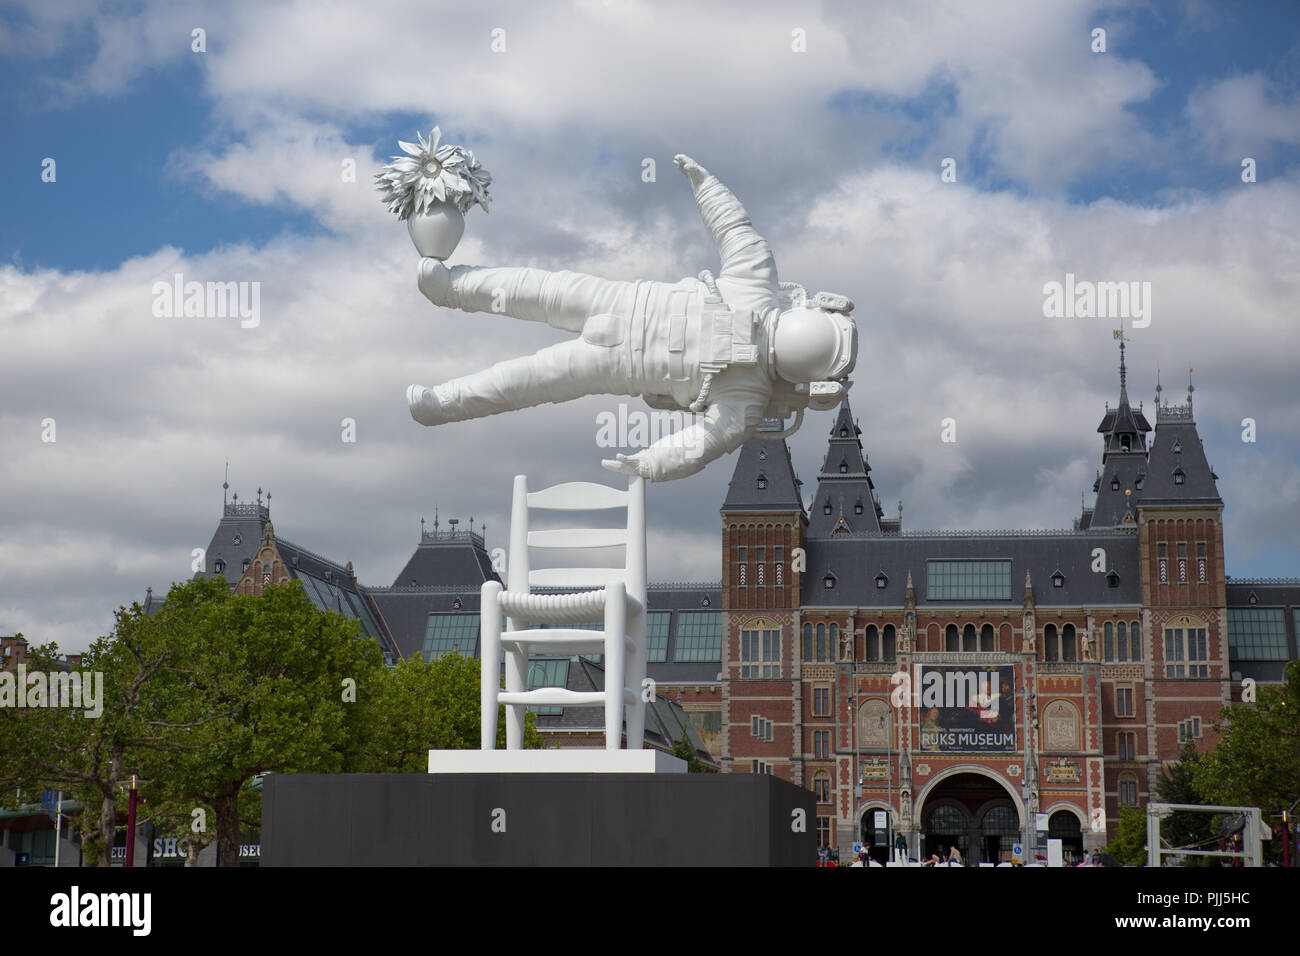 Europa Amsterdam Frühling Museum Astronaut / 2018 Stockfoto